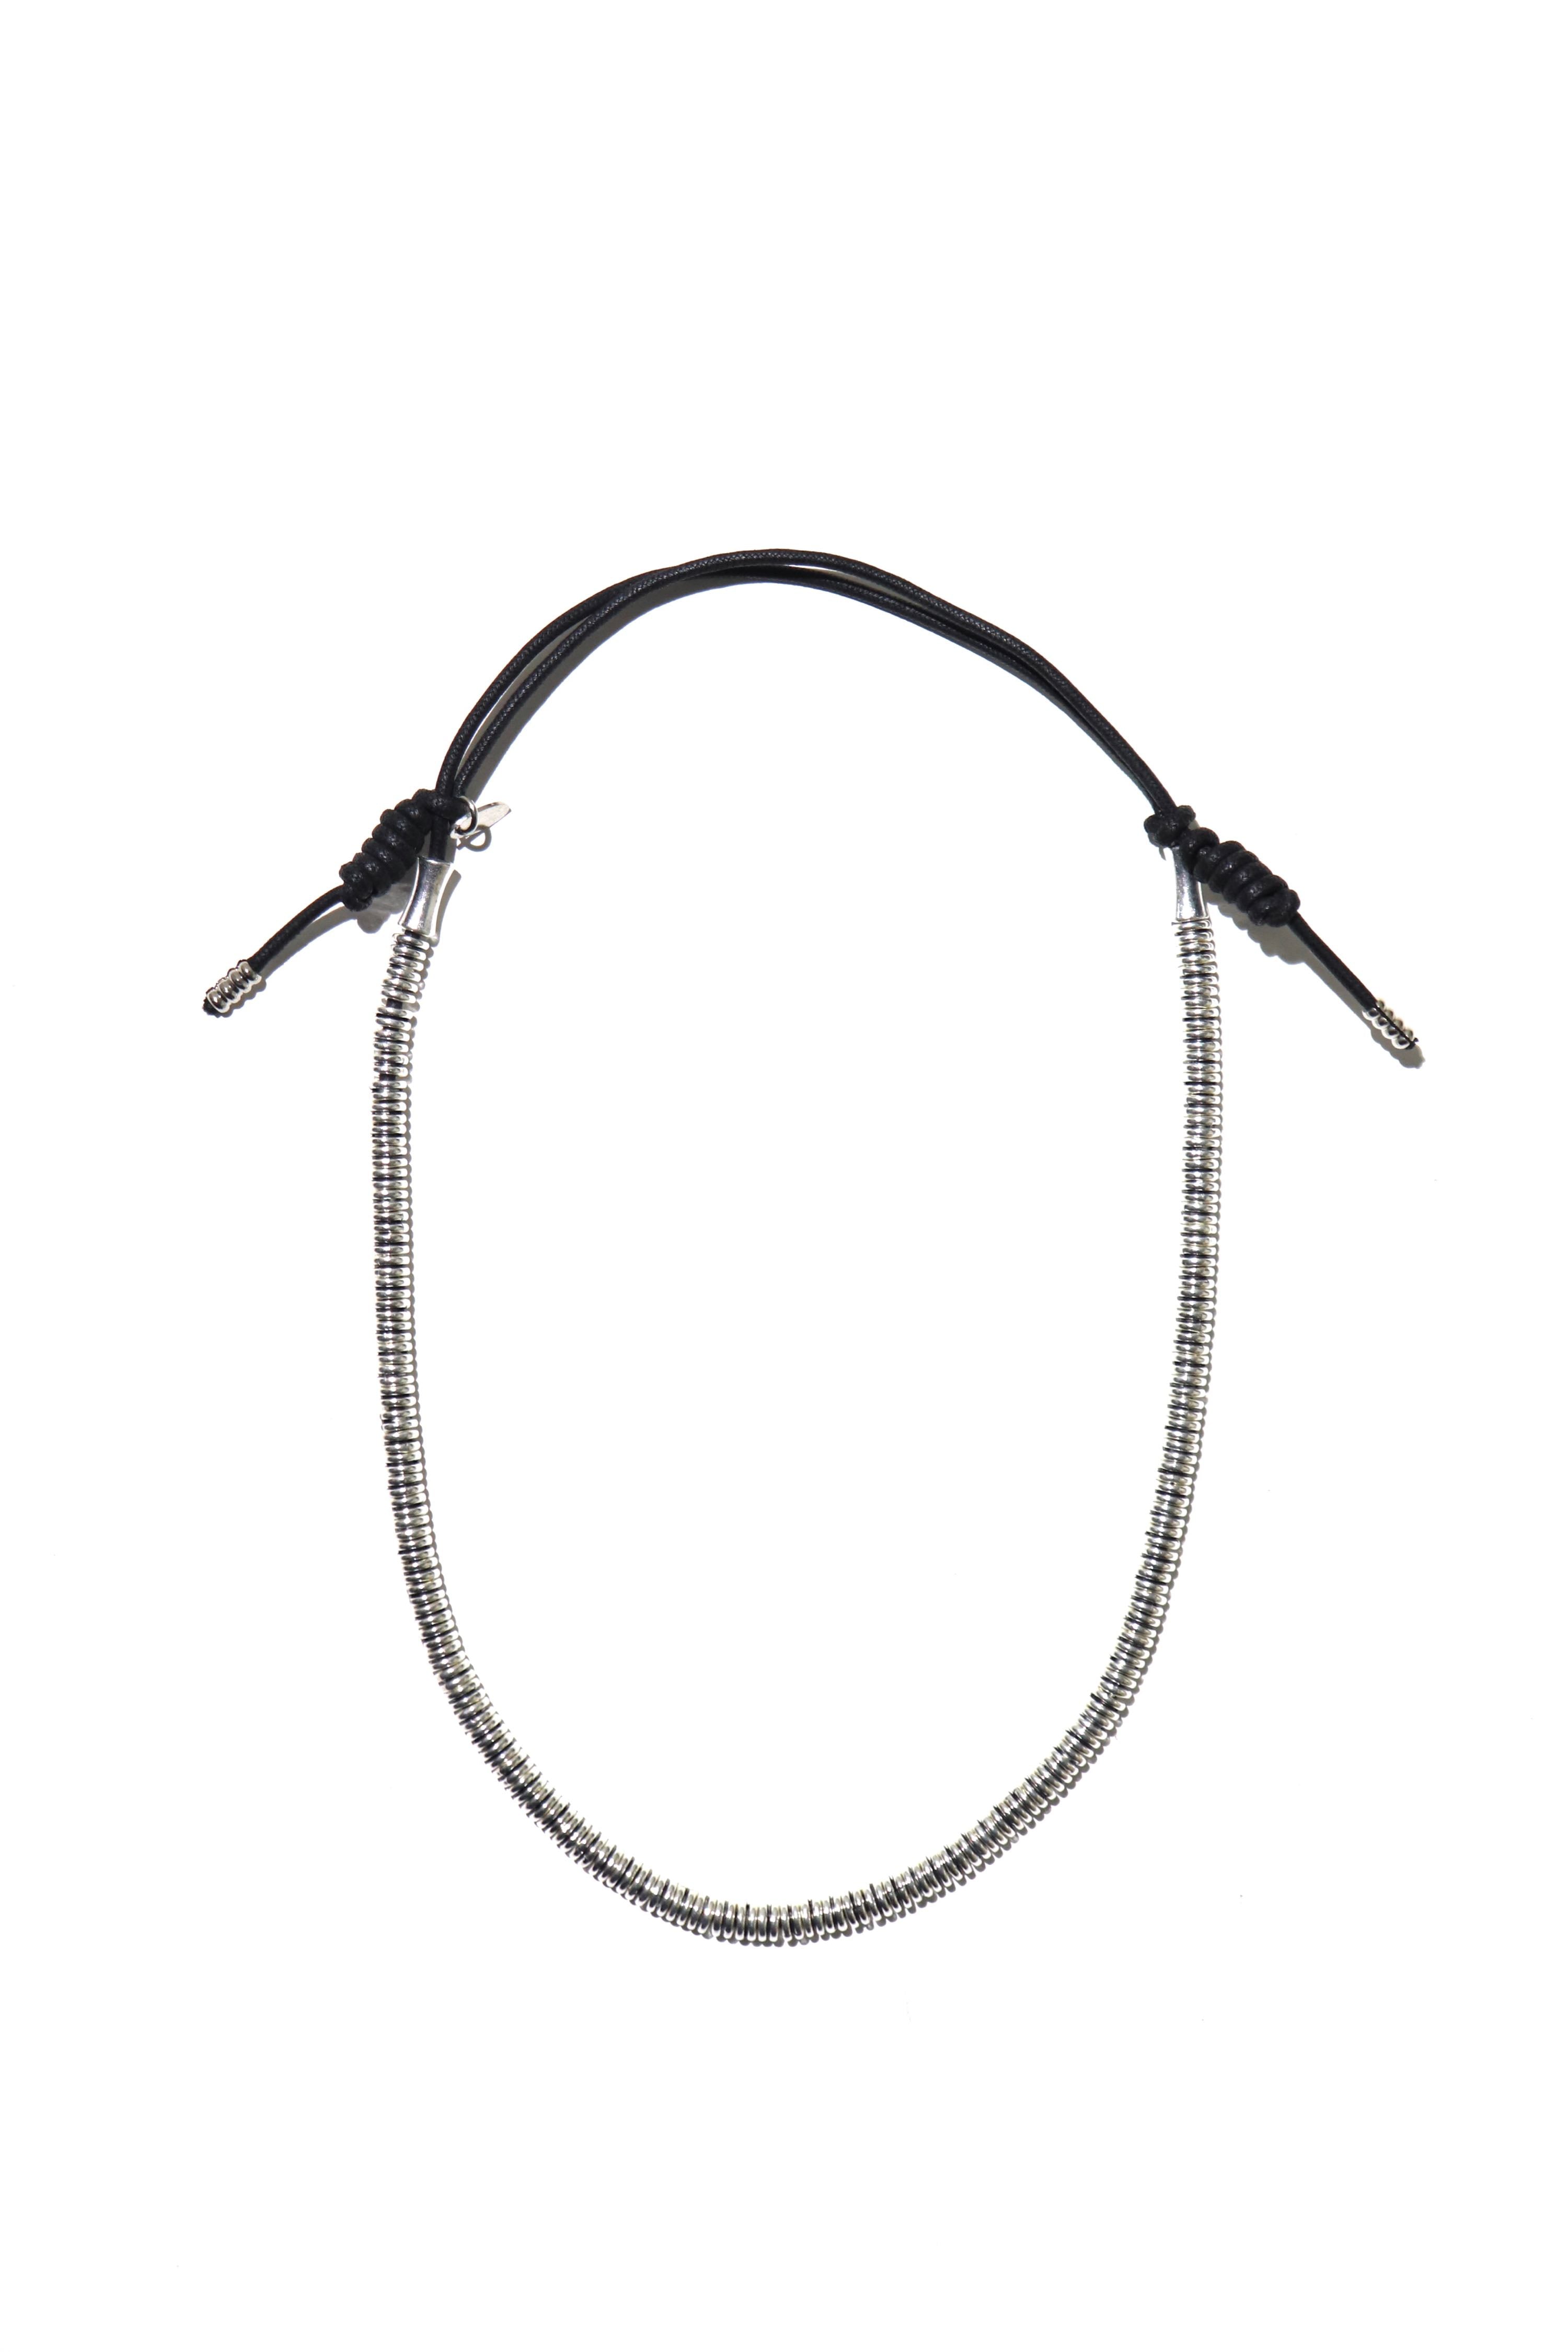 TOGA VIRILIS(トーガ ビリリース)のMetal bangle & necklace setの通販